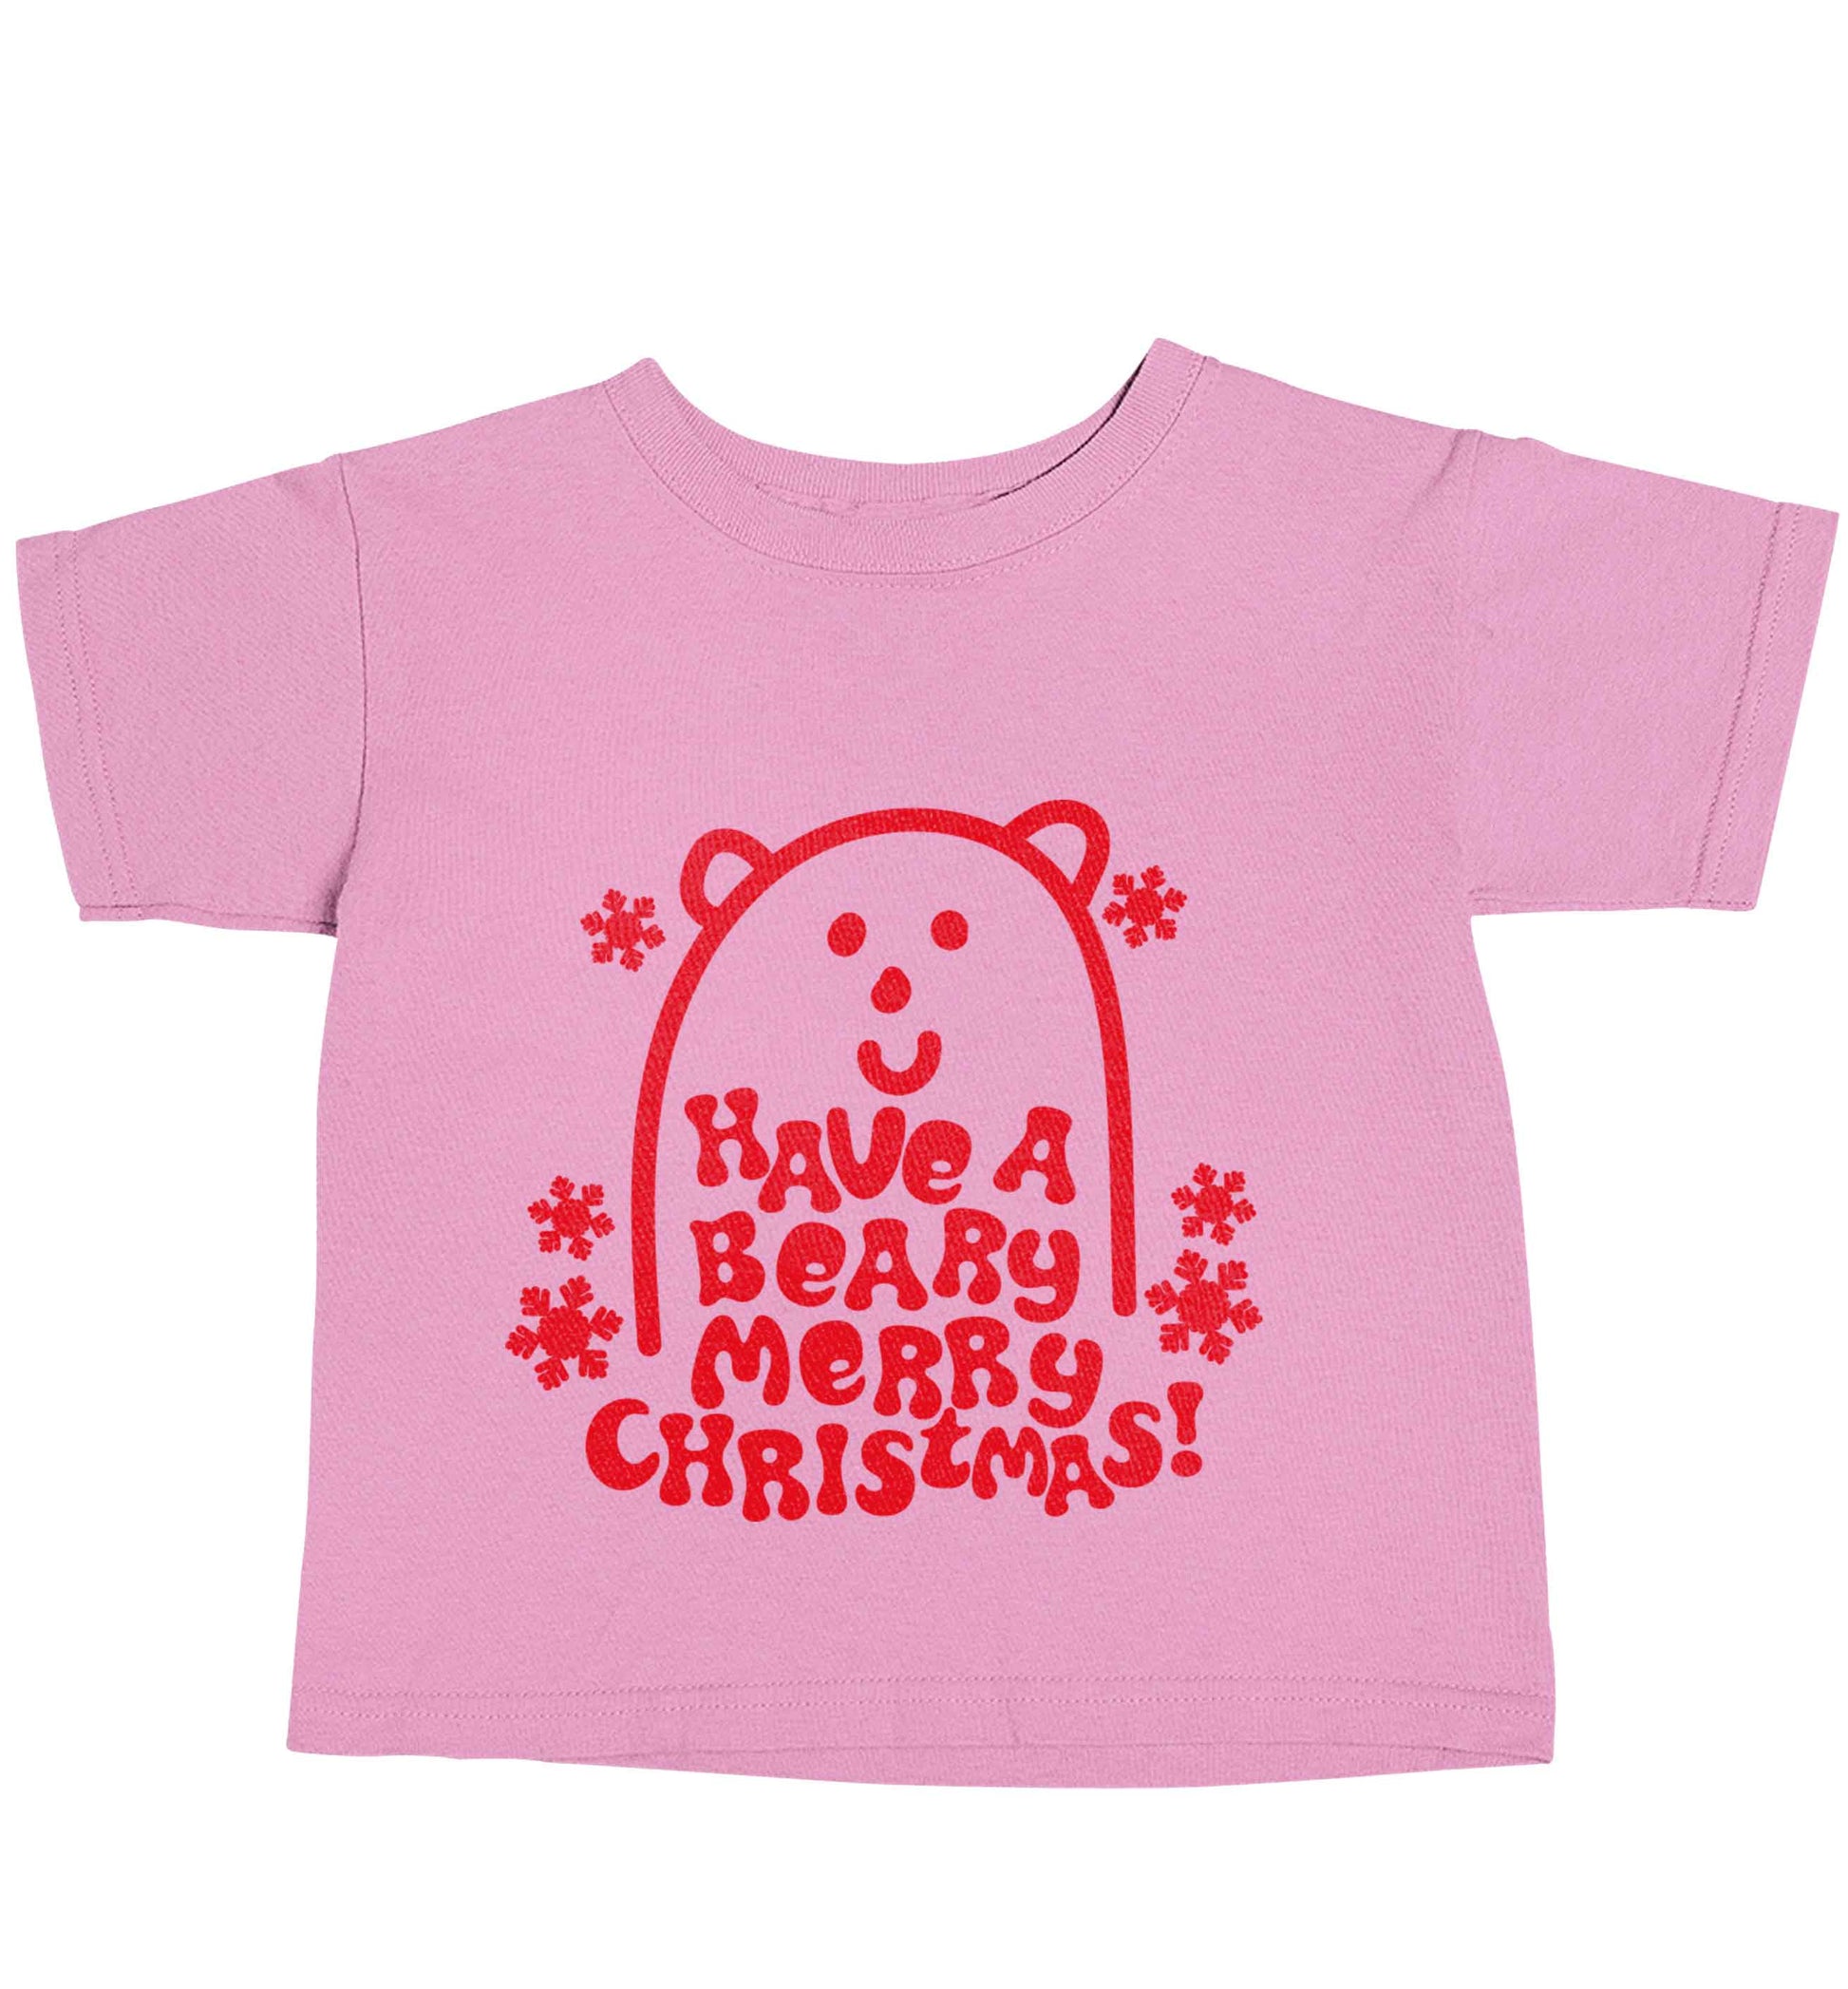 Save The Polar Bears light pink baby toddler Tshirt 2 Years